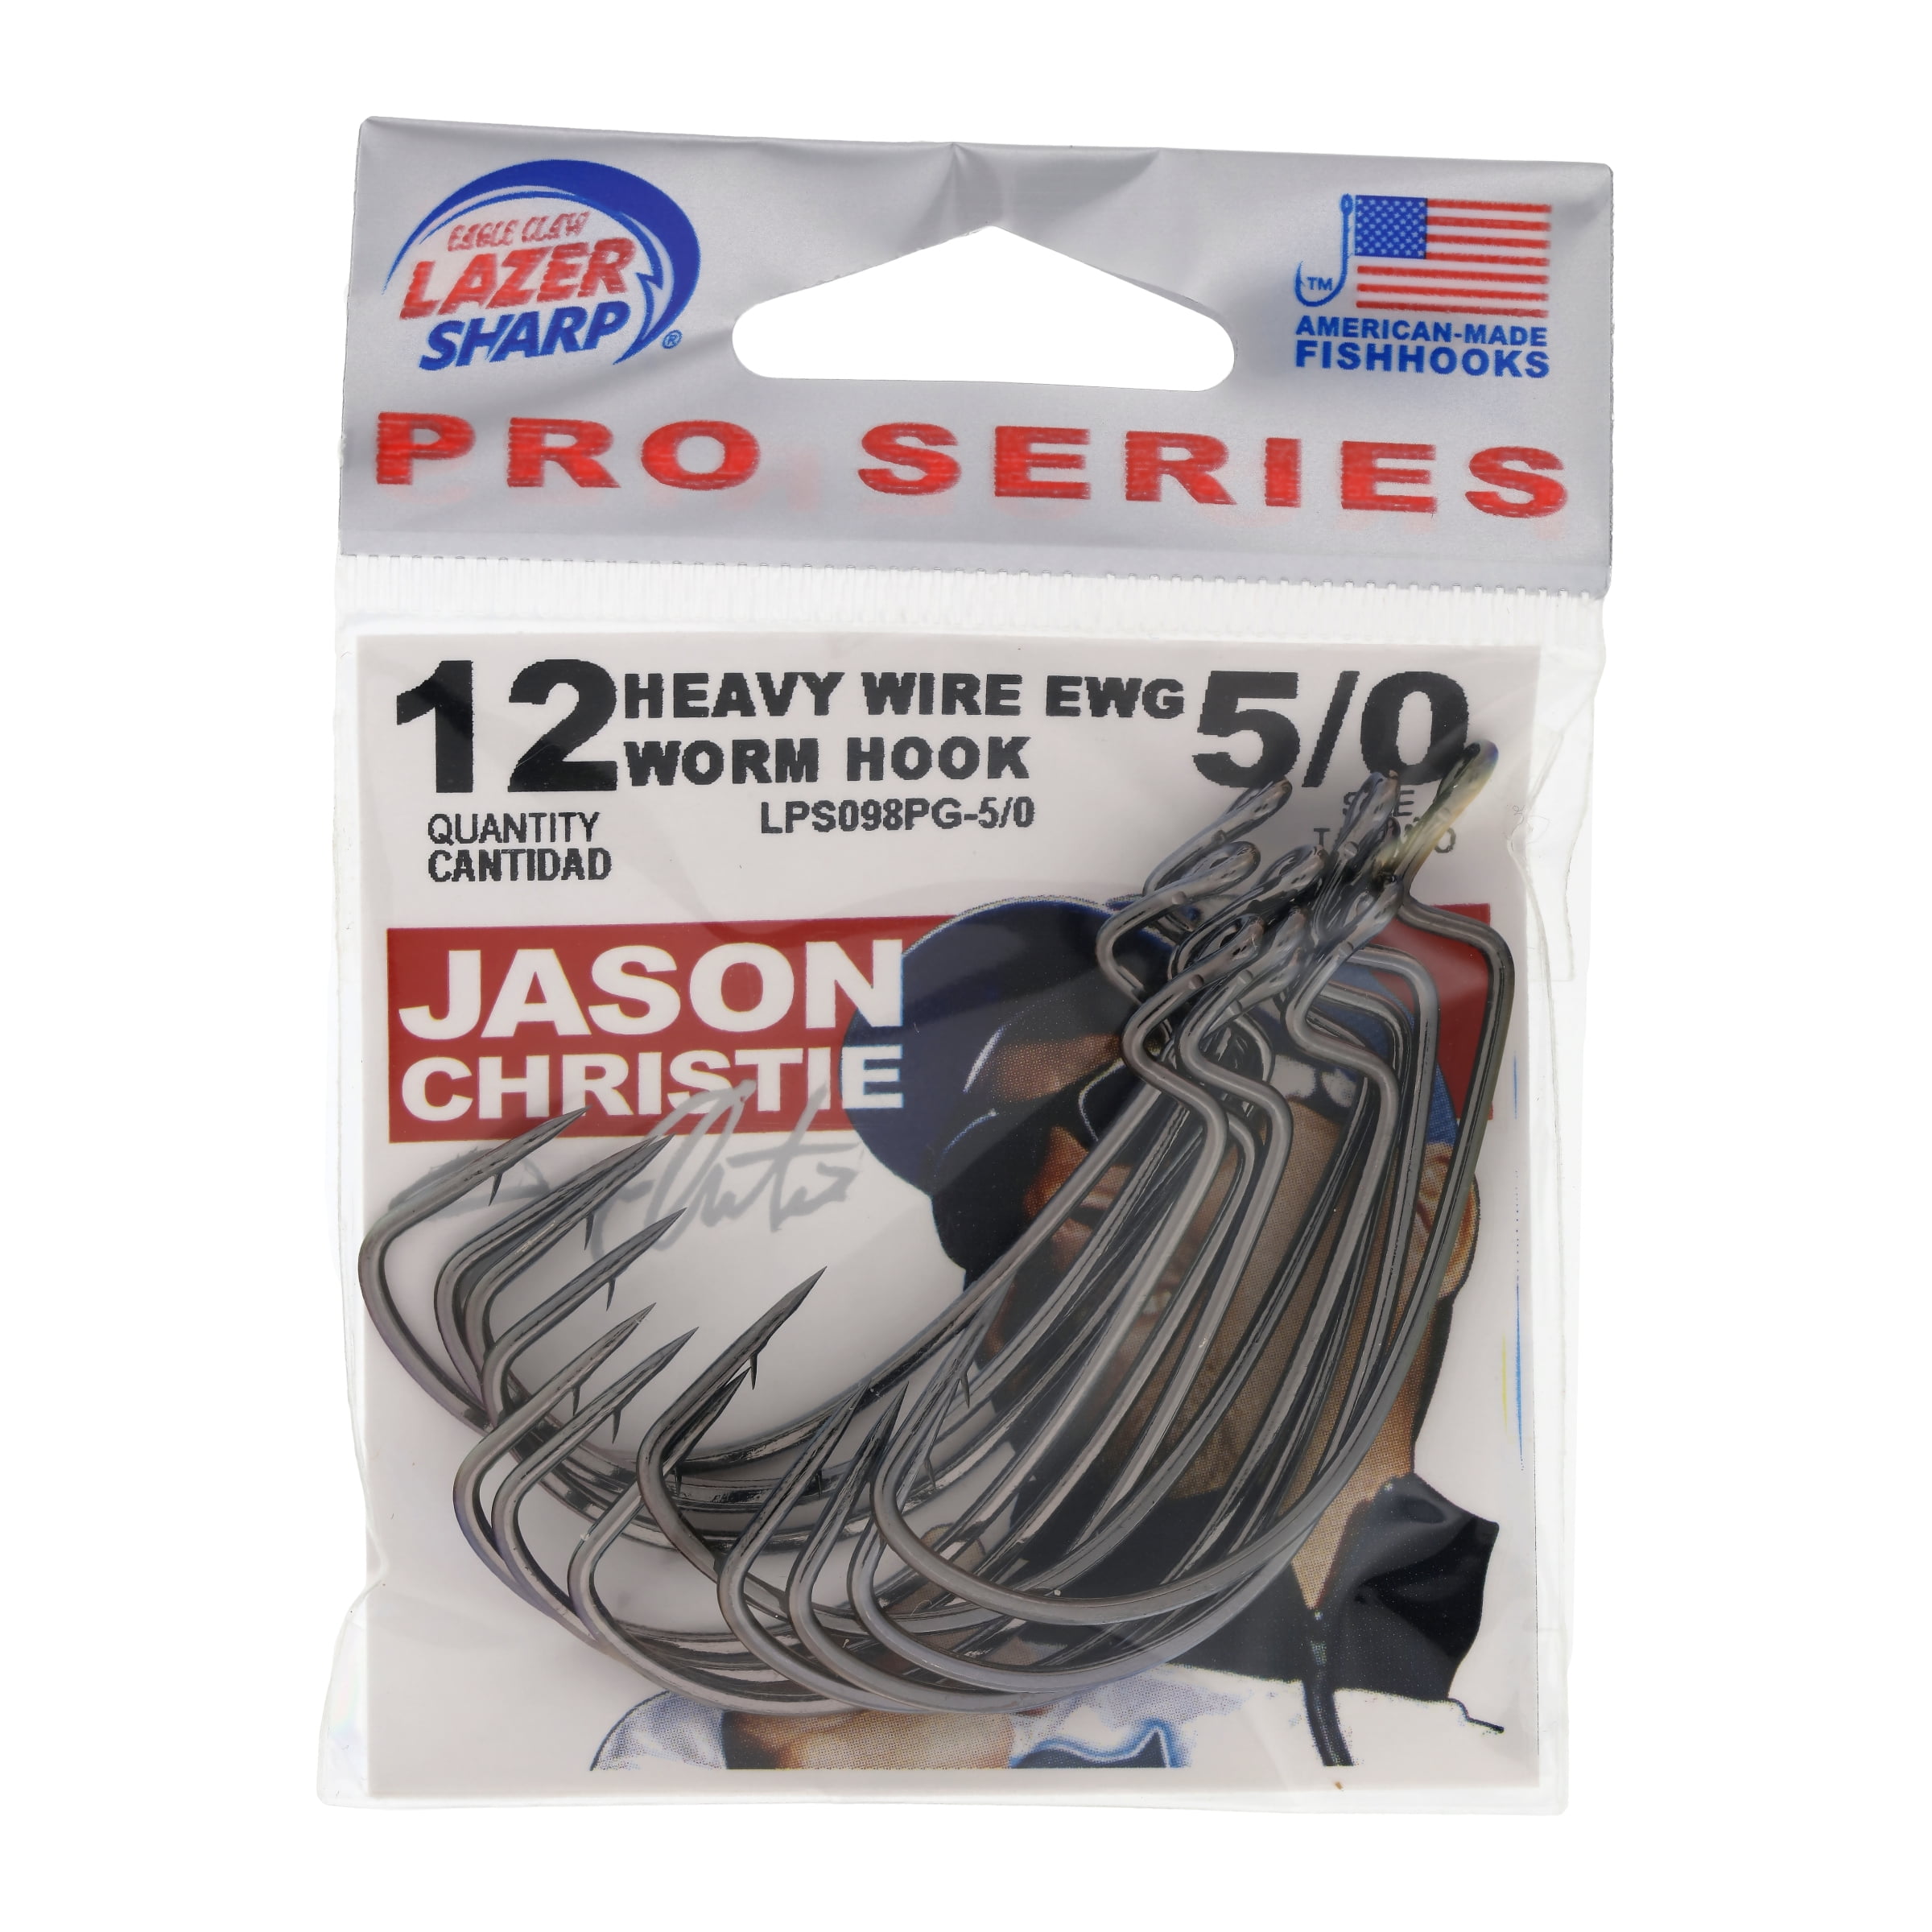 Eagle Claw Lazer Sharp Jason Christie Heavy Wire EWG Worm Hook 12 ct Pack, Black